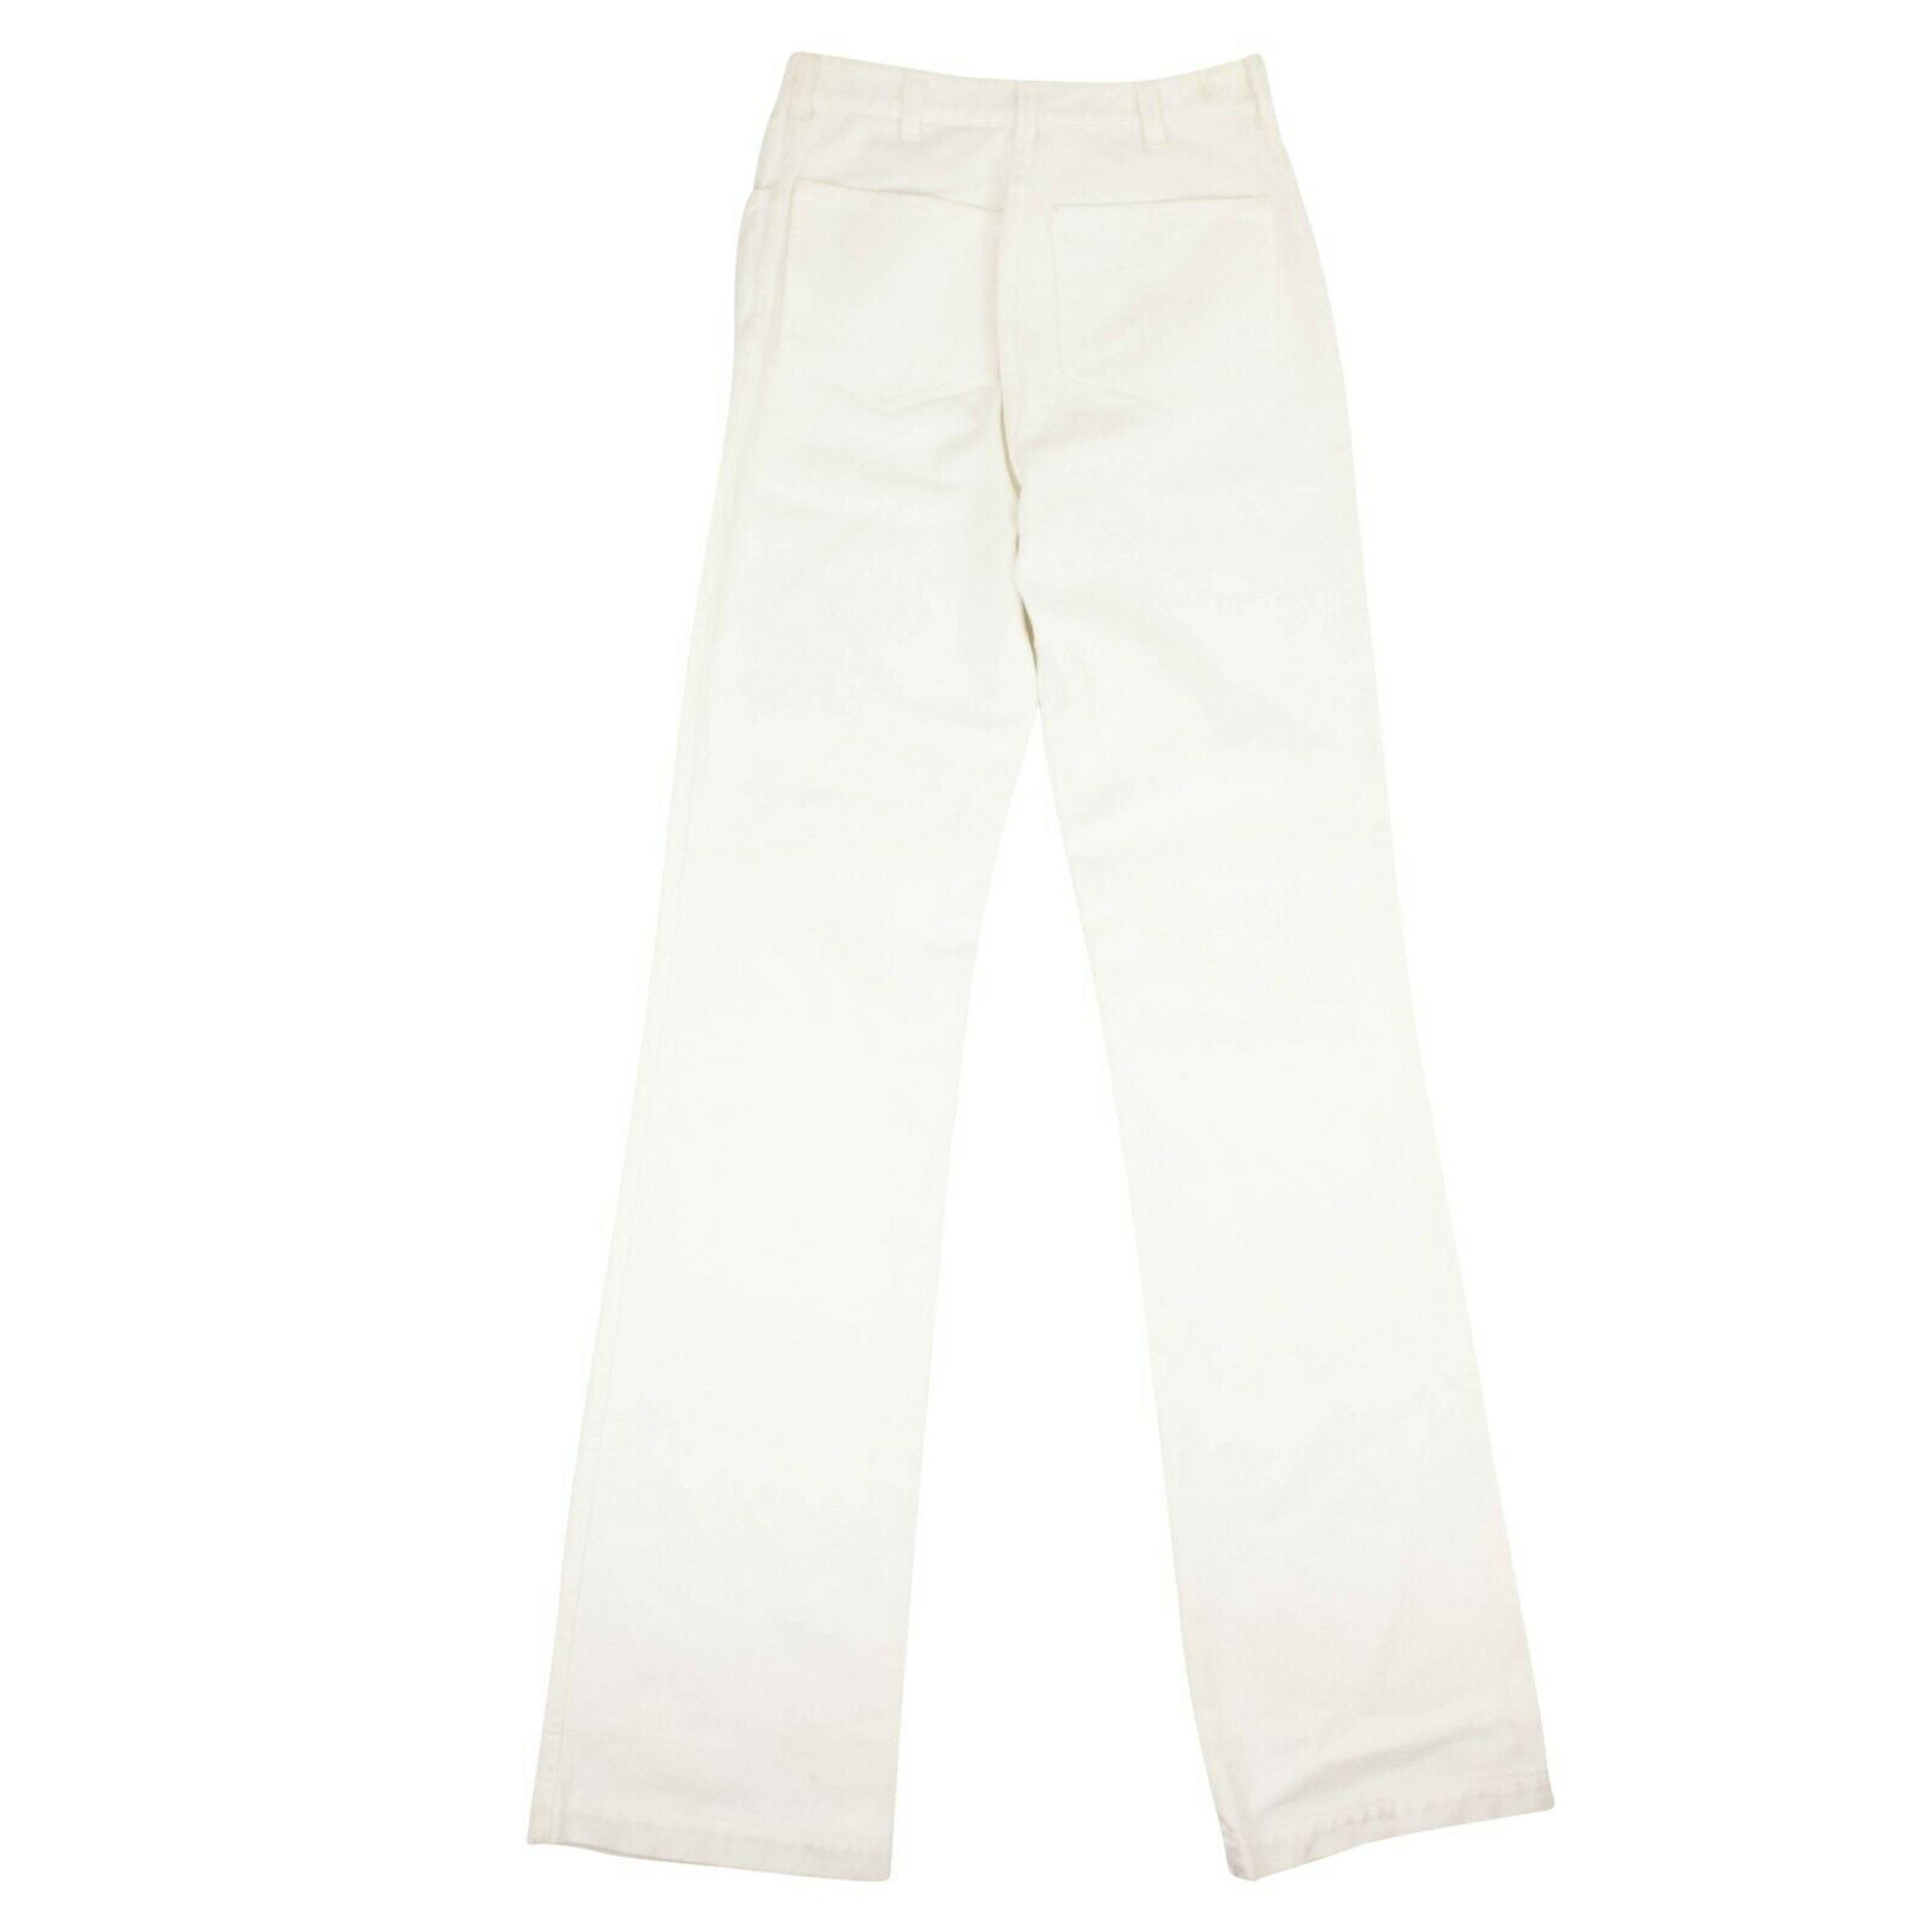 Alternate View 1 of White Denim Mid Rise Straight Jeans